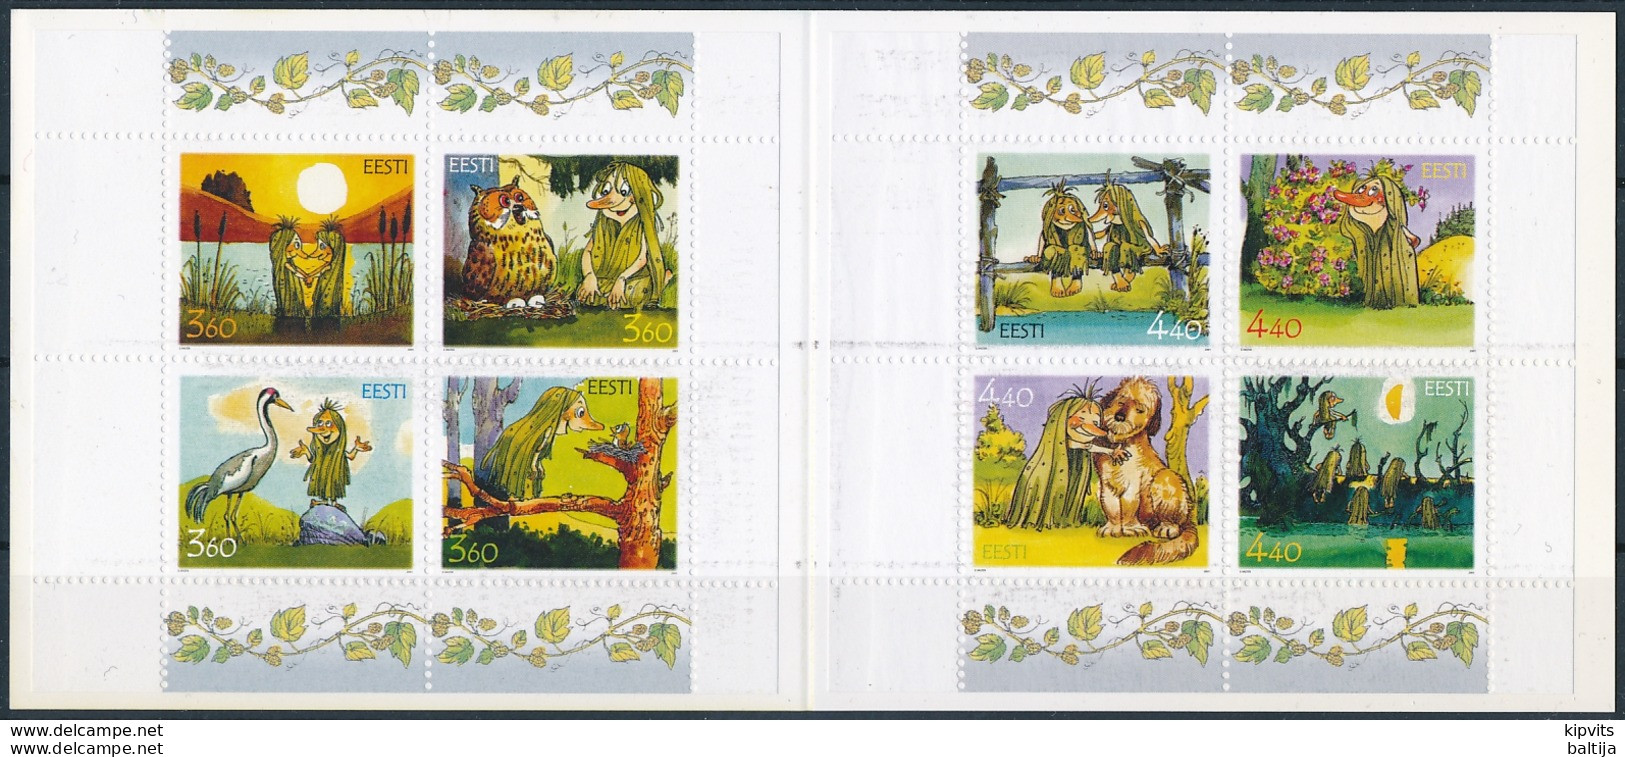 Mi MH 2 Booklet MNH ** Characters Fairytale Fairy Tale Pokuland Edgar Valter - Owl, Crane, Dog - Estonia